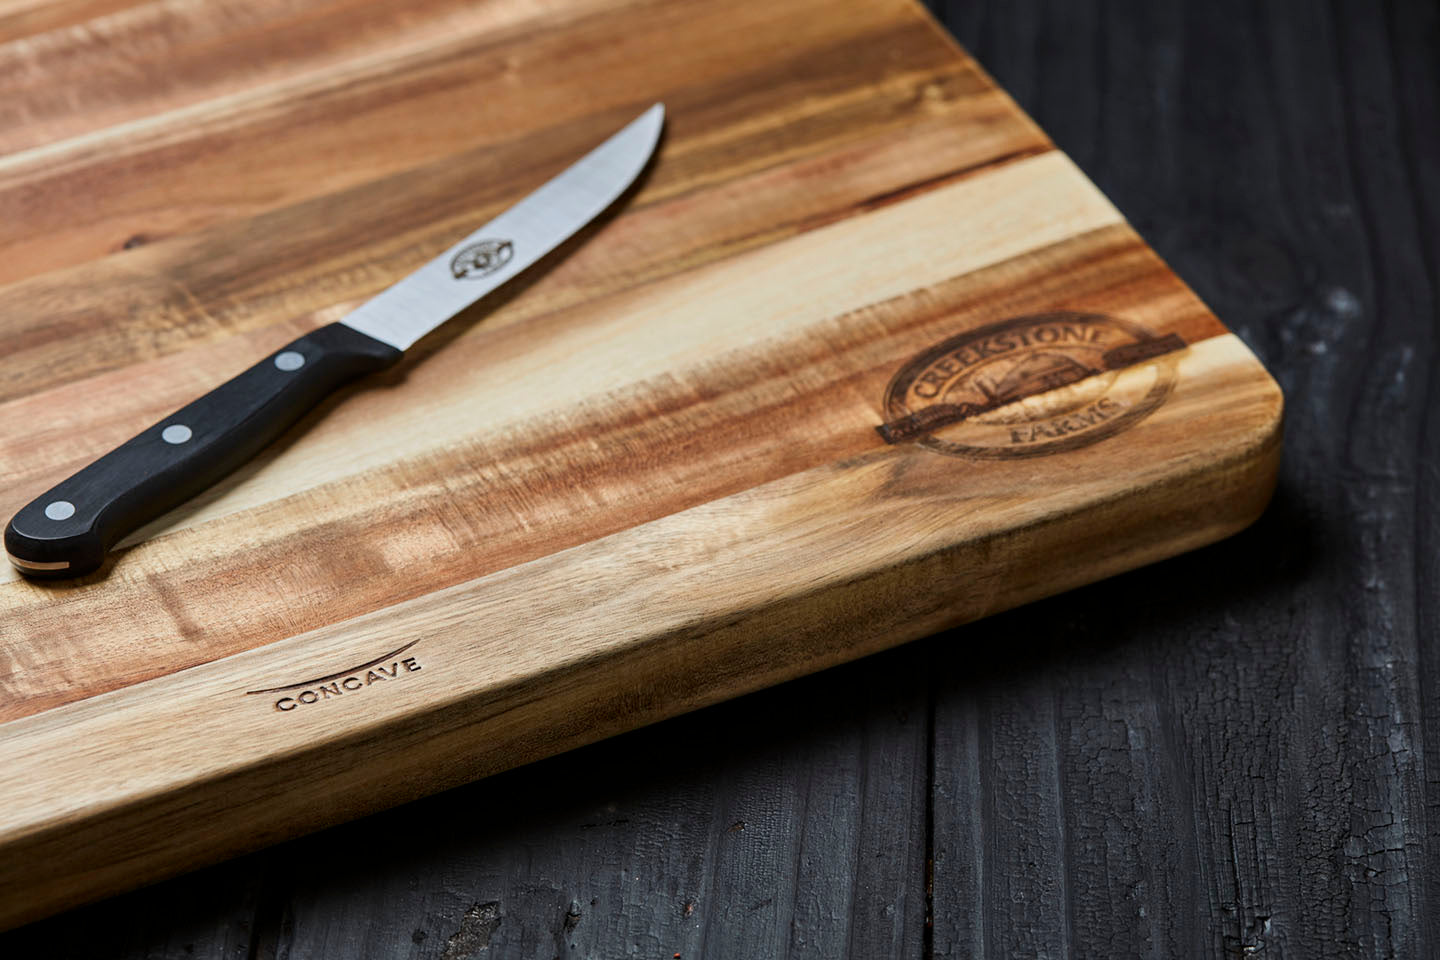 Wood Chopping Board — COCALICO CREEK HOME